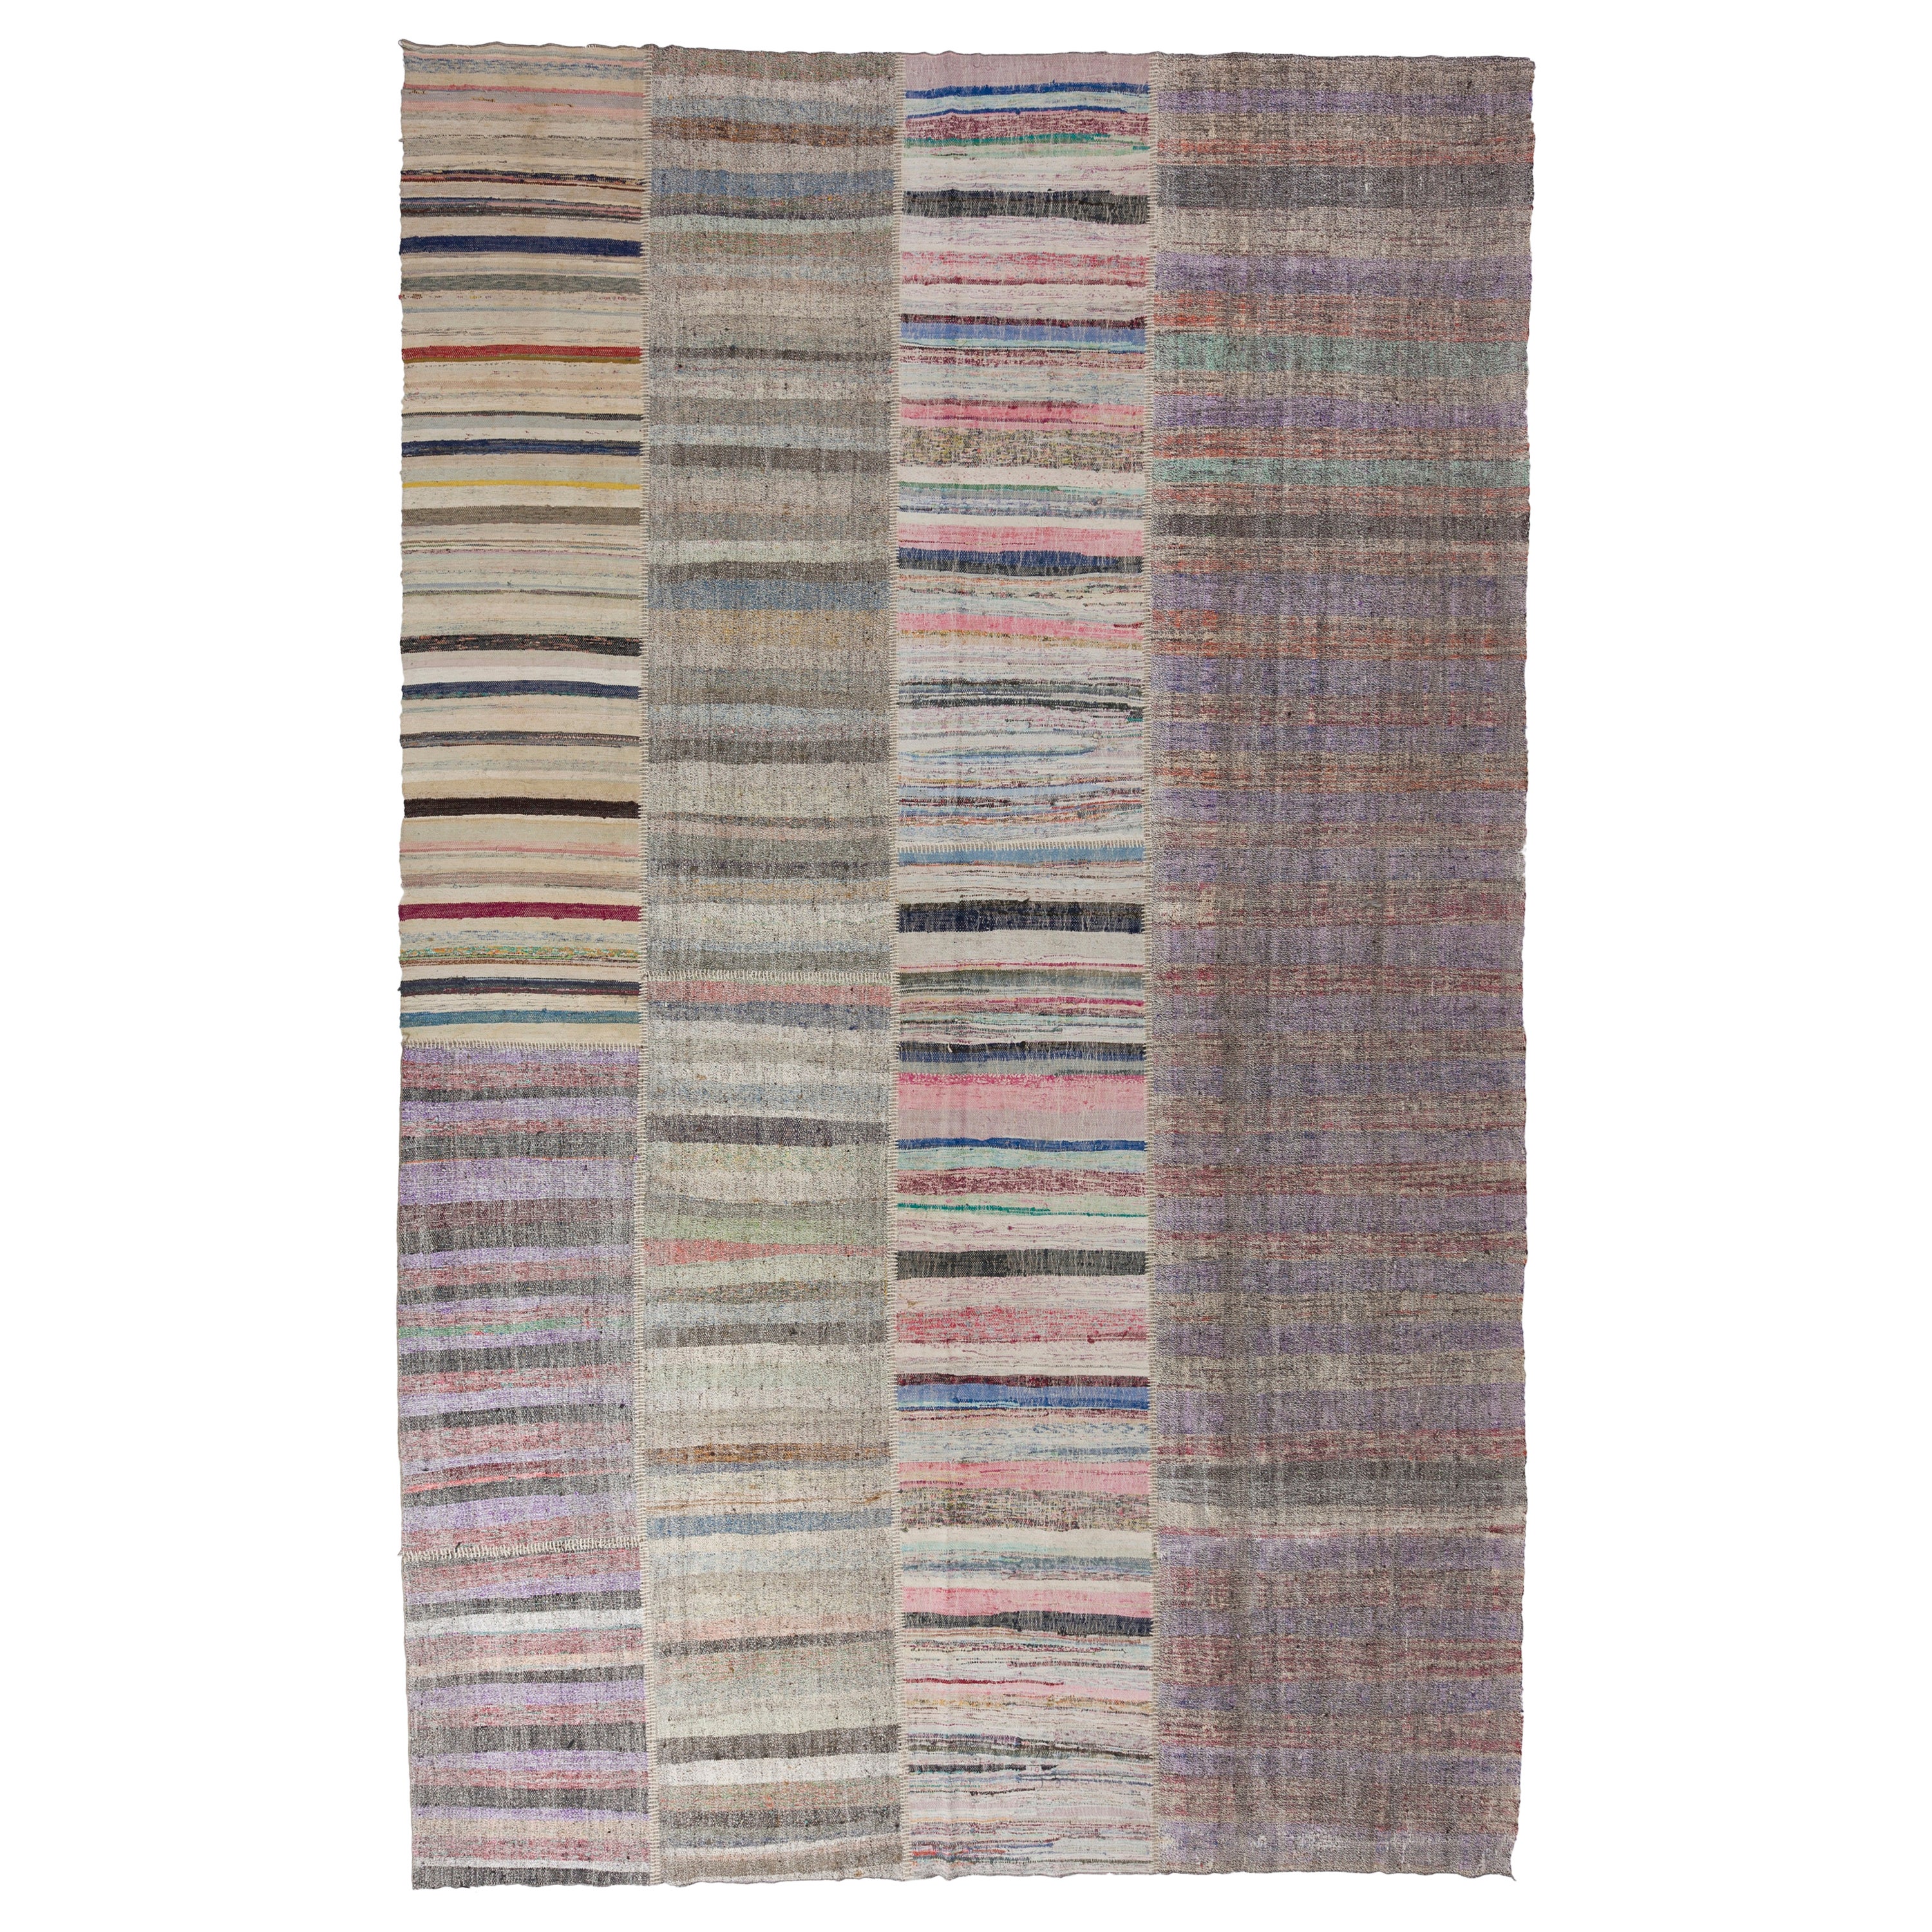 10.2x17 Ft Colorful Vintage Handmade Striped Anatolian Kilim. Flat-Weave Rag Rug